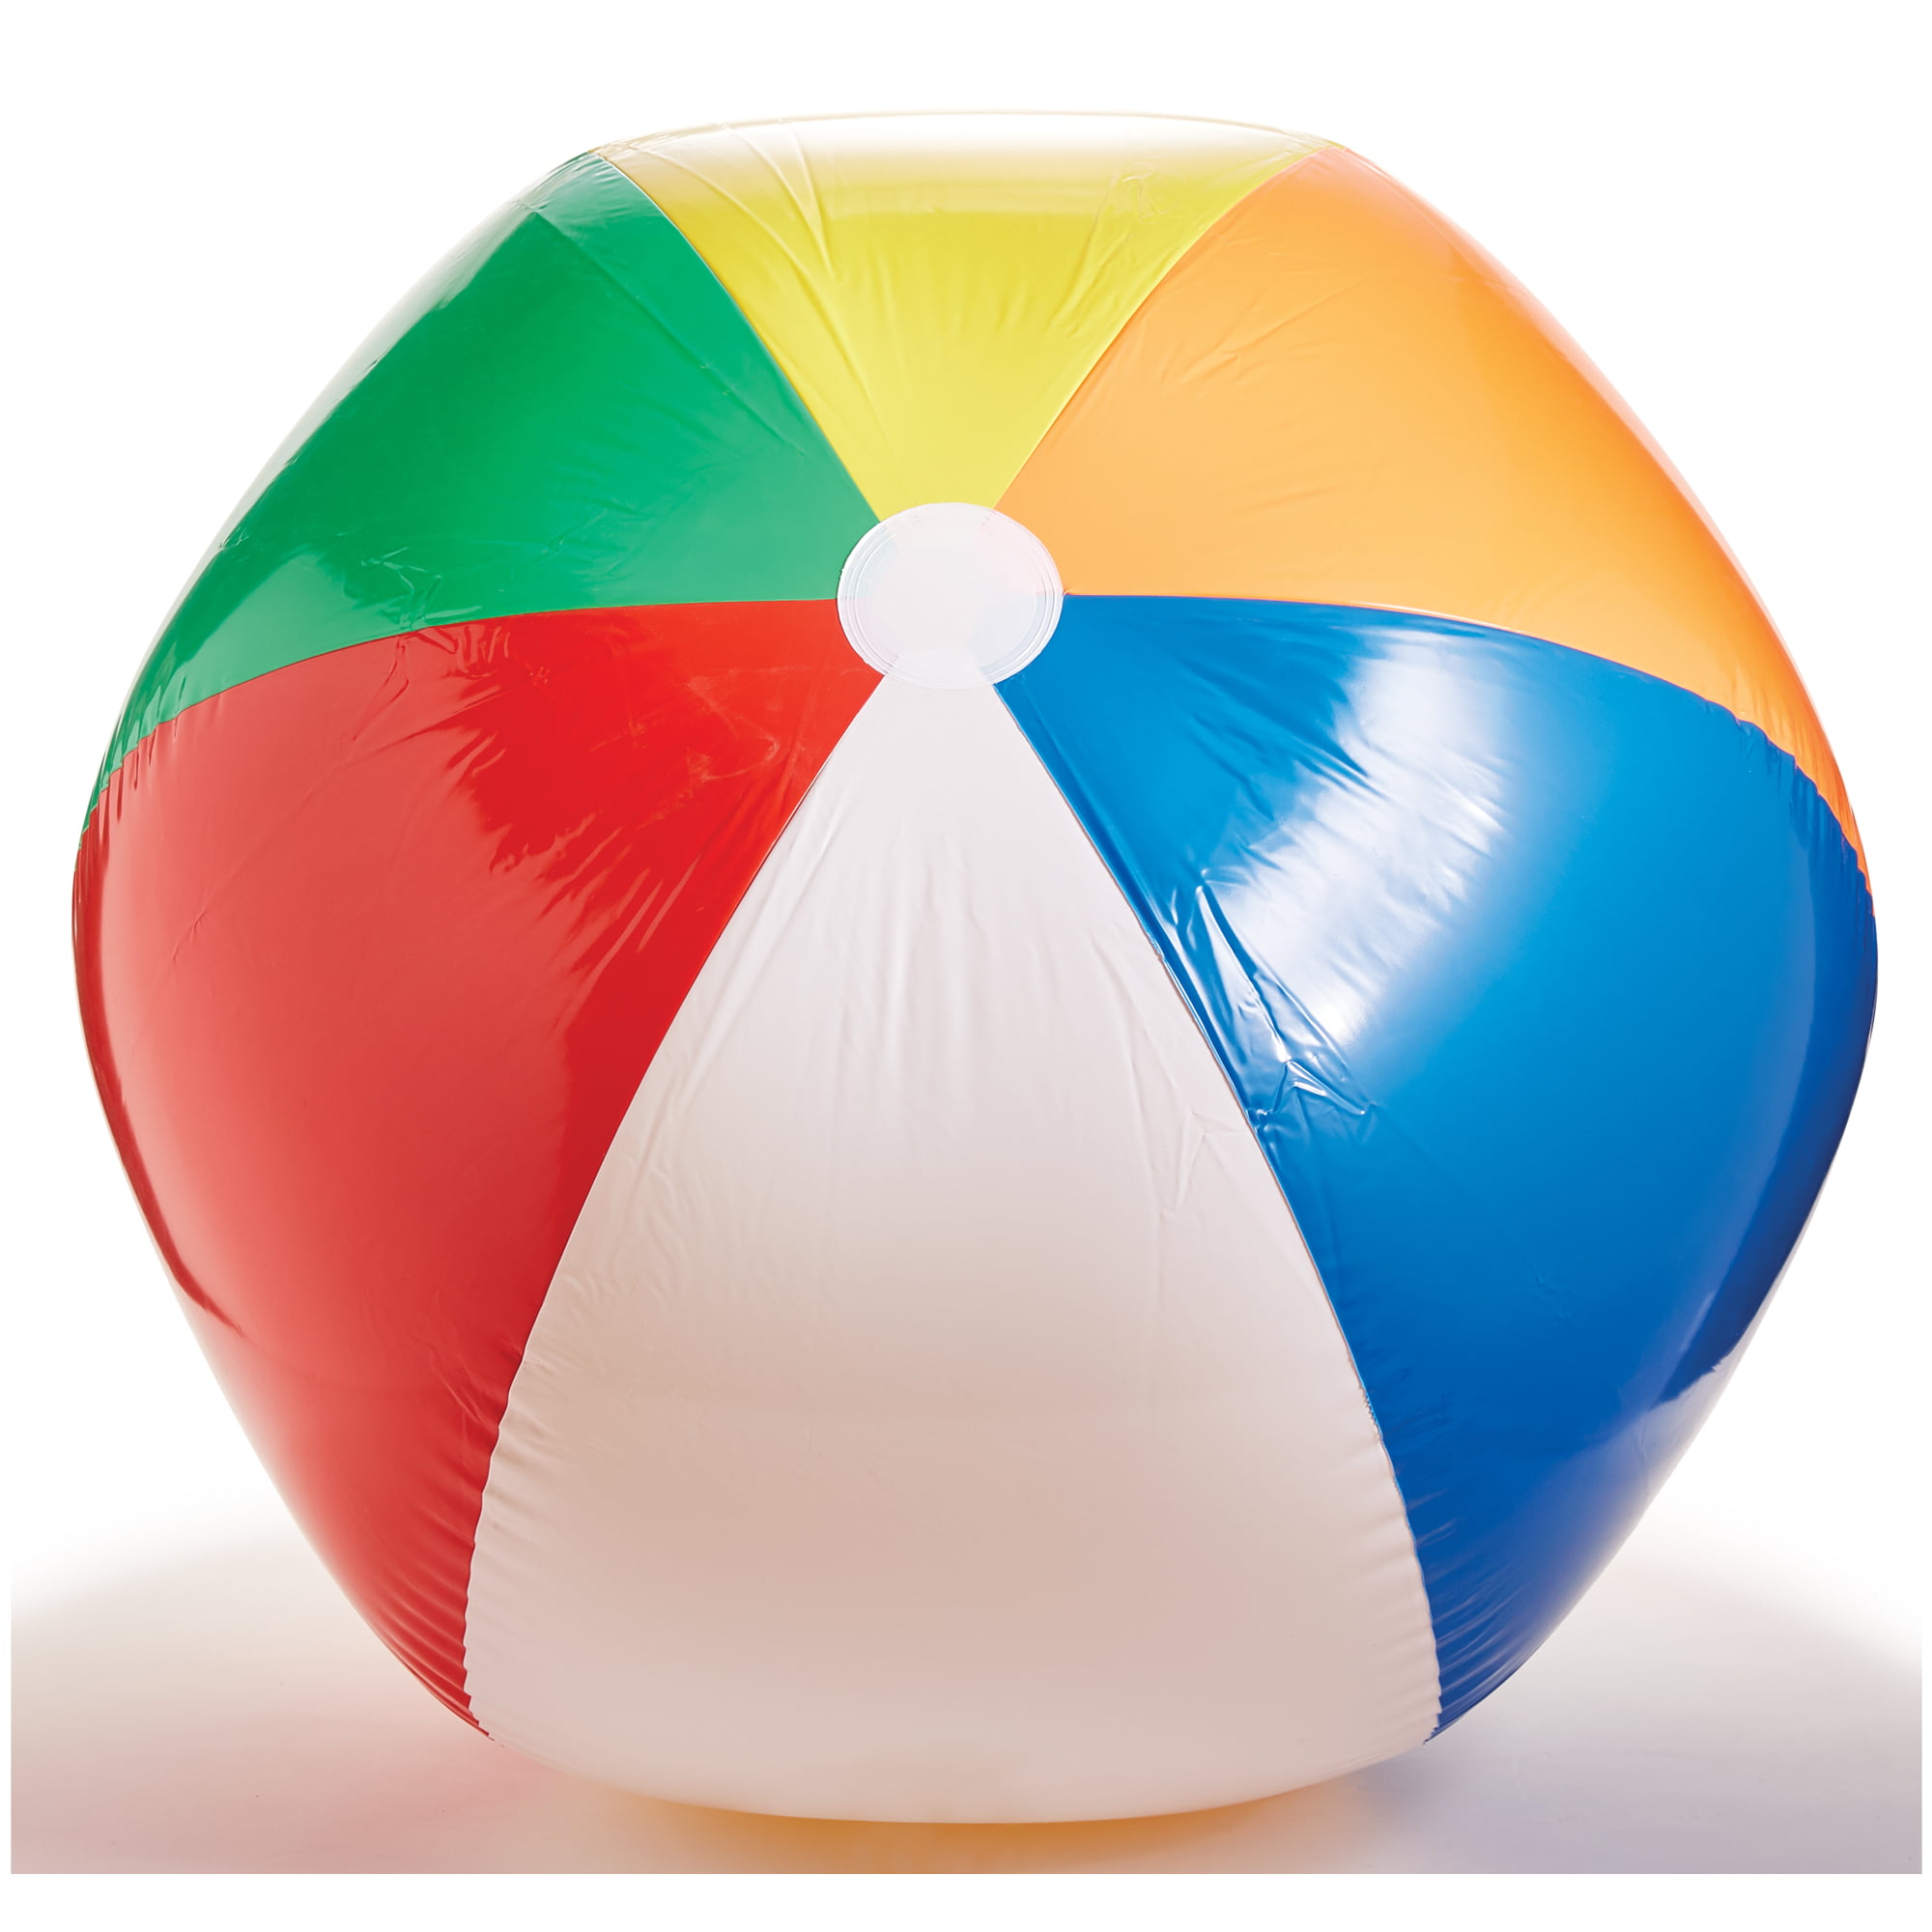 Jumbo 48 Beach Ball with Colorful Hexagons